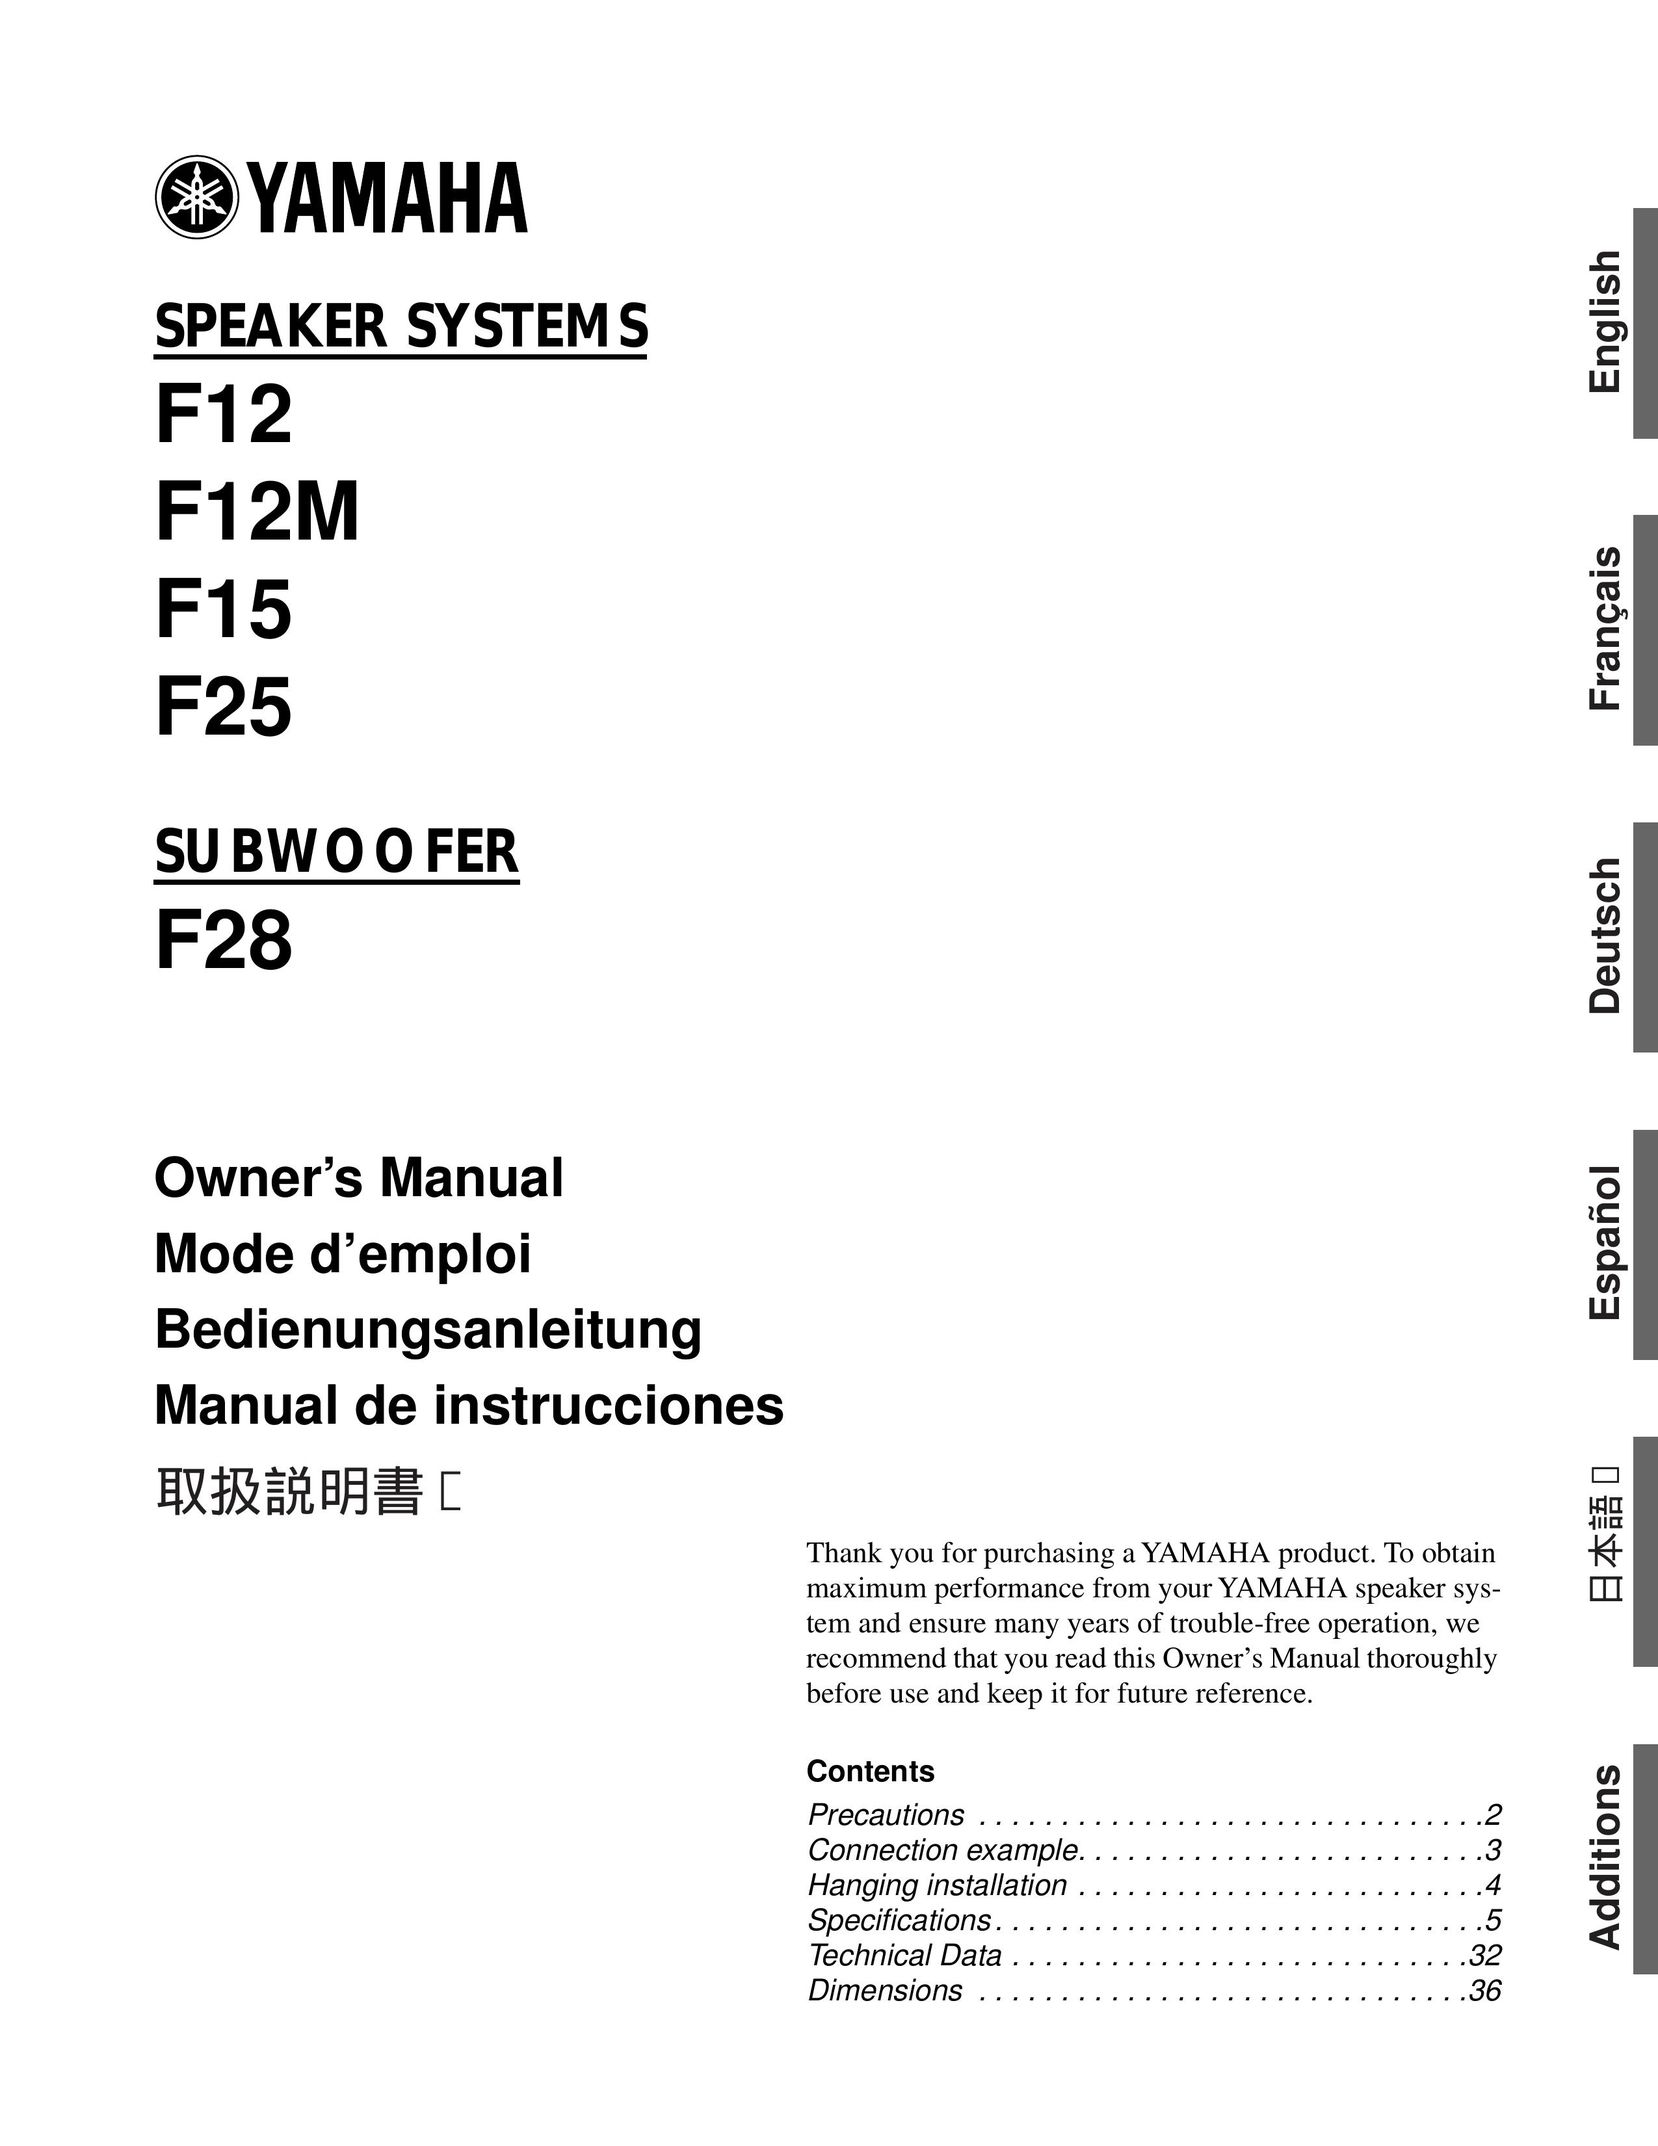 Yamaha F25 Speaker User Manual